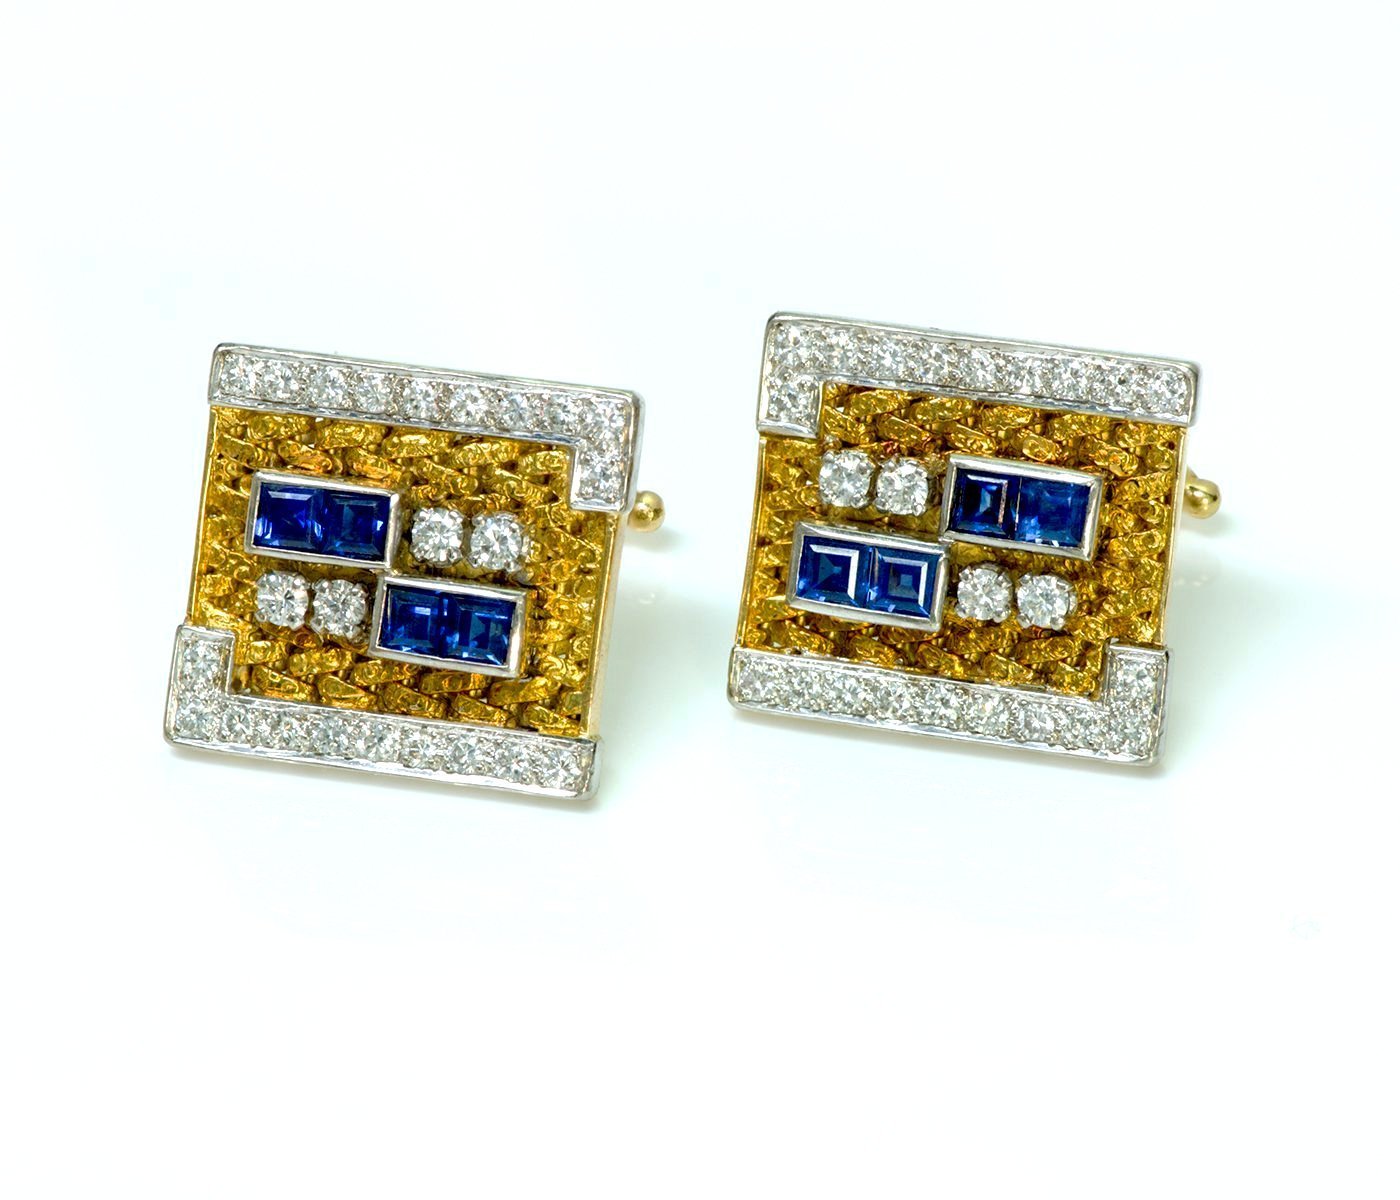 Cufflinks for Adornment and Elegant Attire - DSF Antique Jewelry